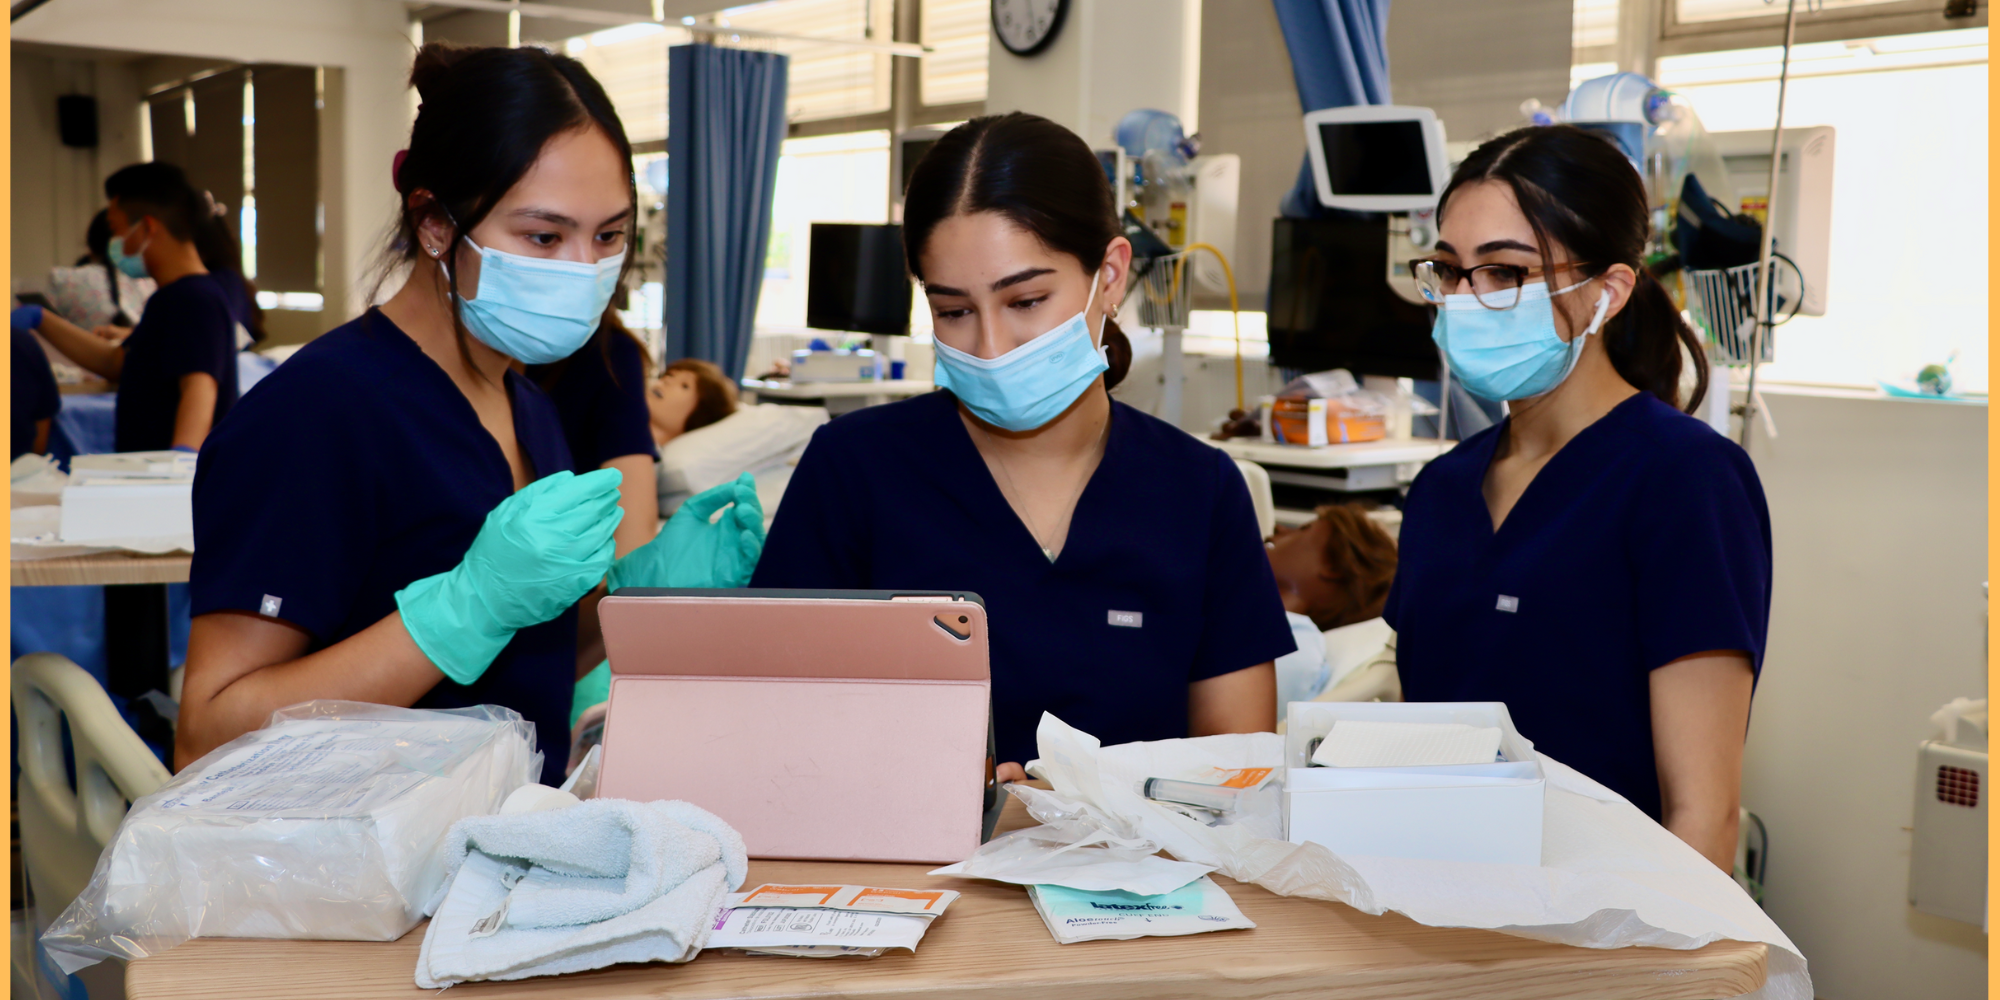 Nursing students participating in Skill Lab training. Photo credit: Joanne Delamar, 2022.